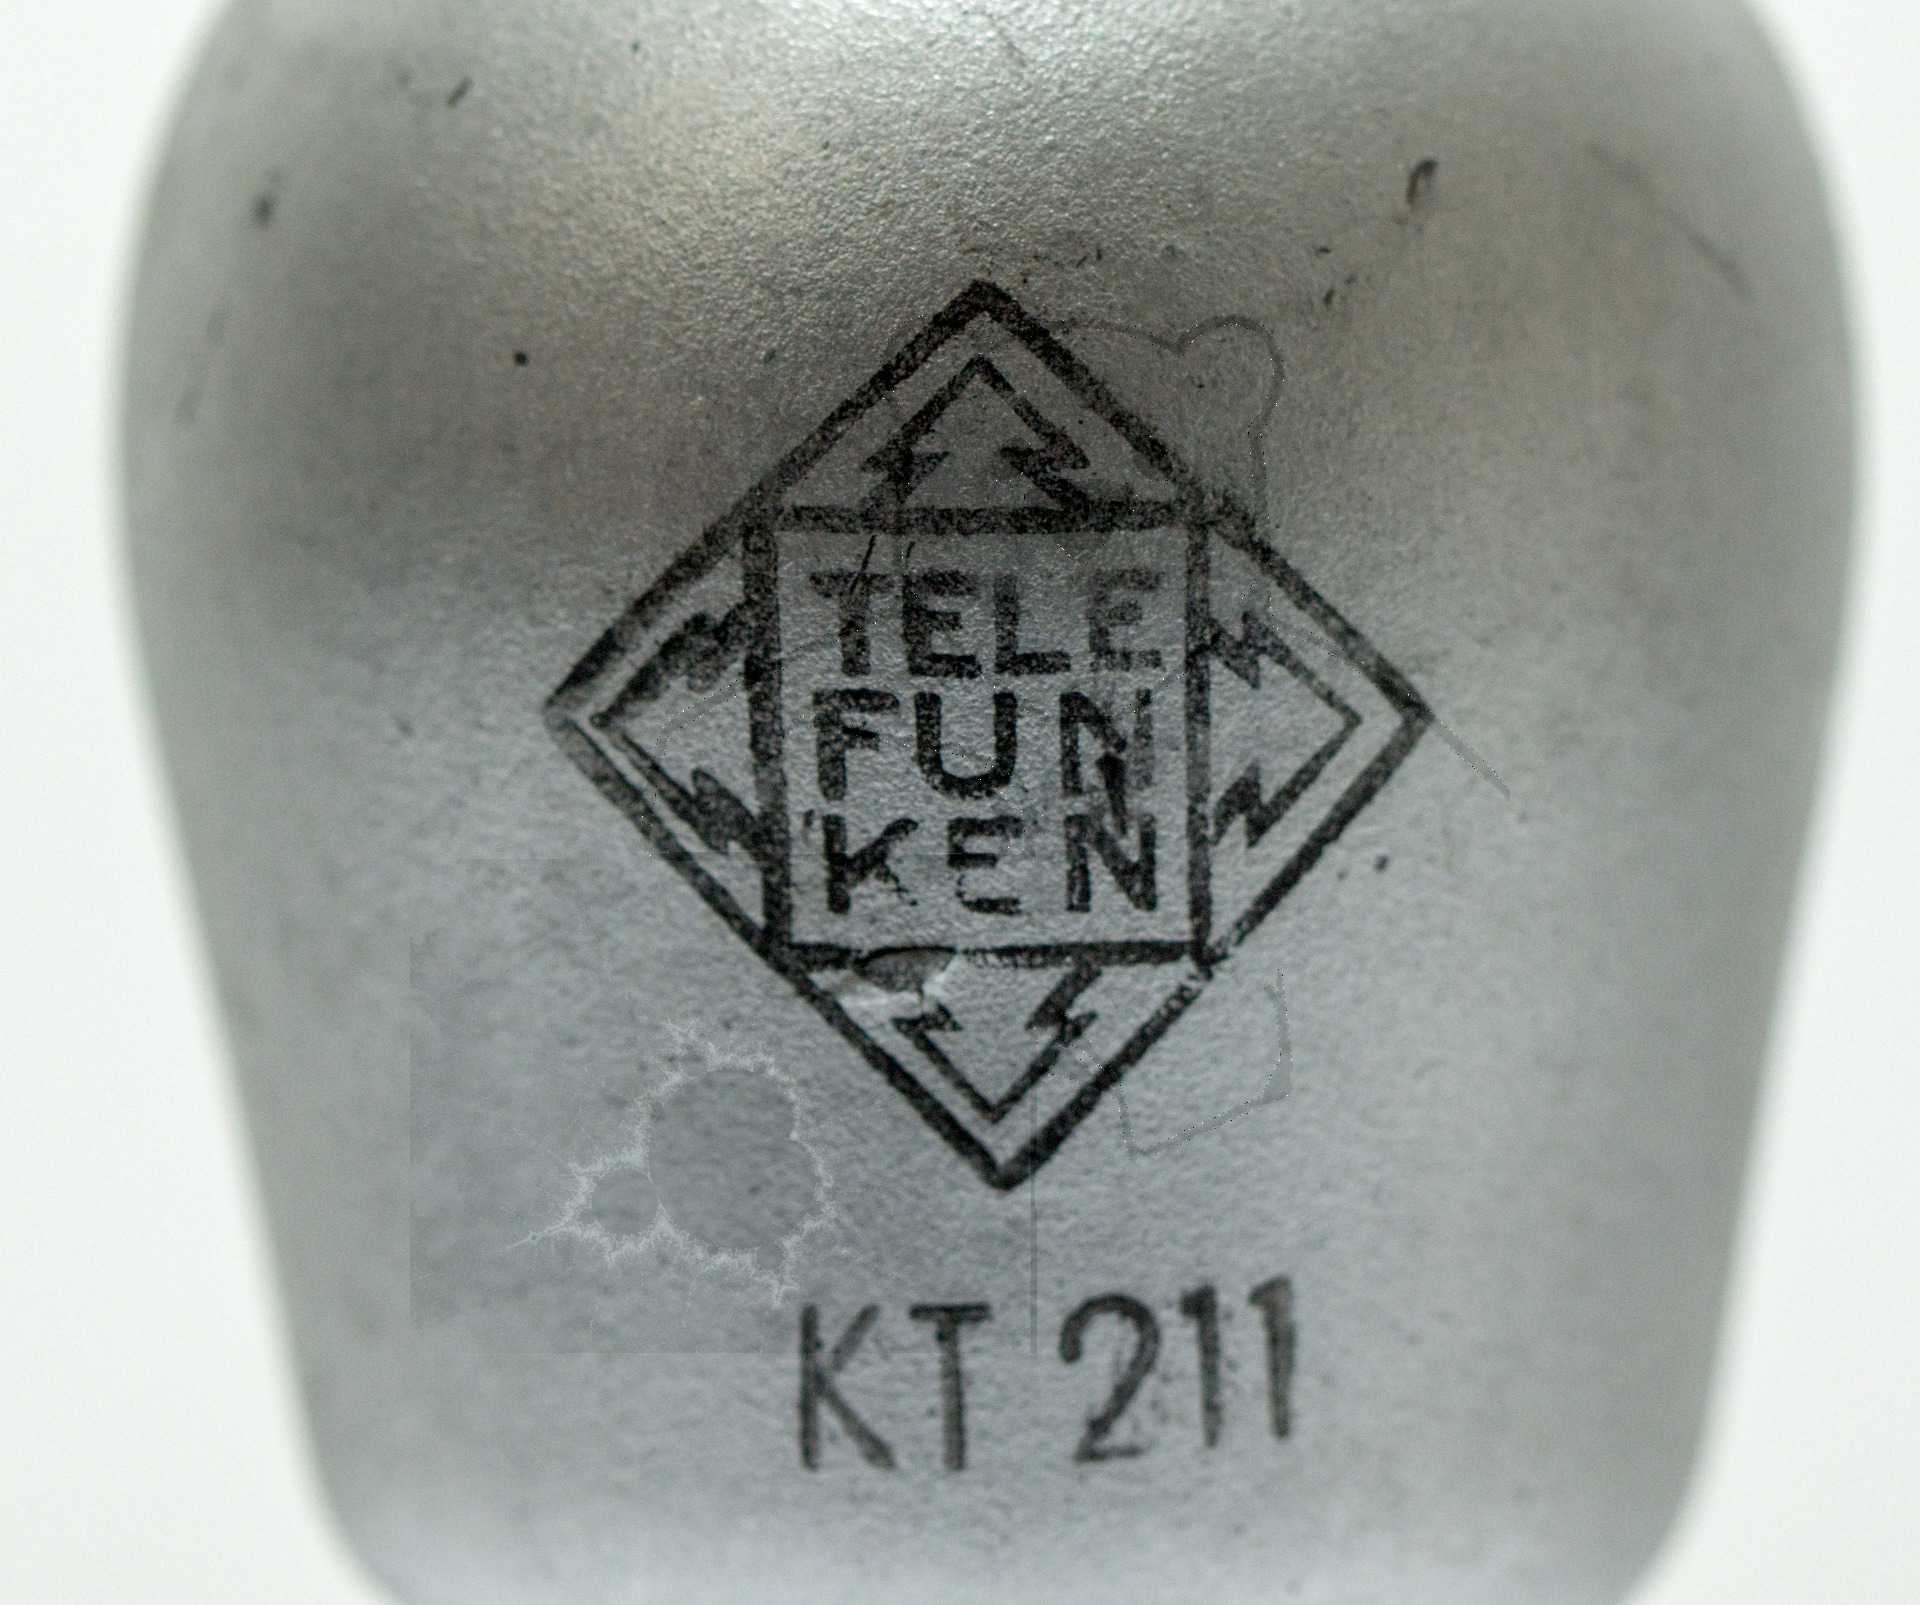 Röhre KT211 (Europasockel, 5pol) Bild 7 - Detailansicht Logo